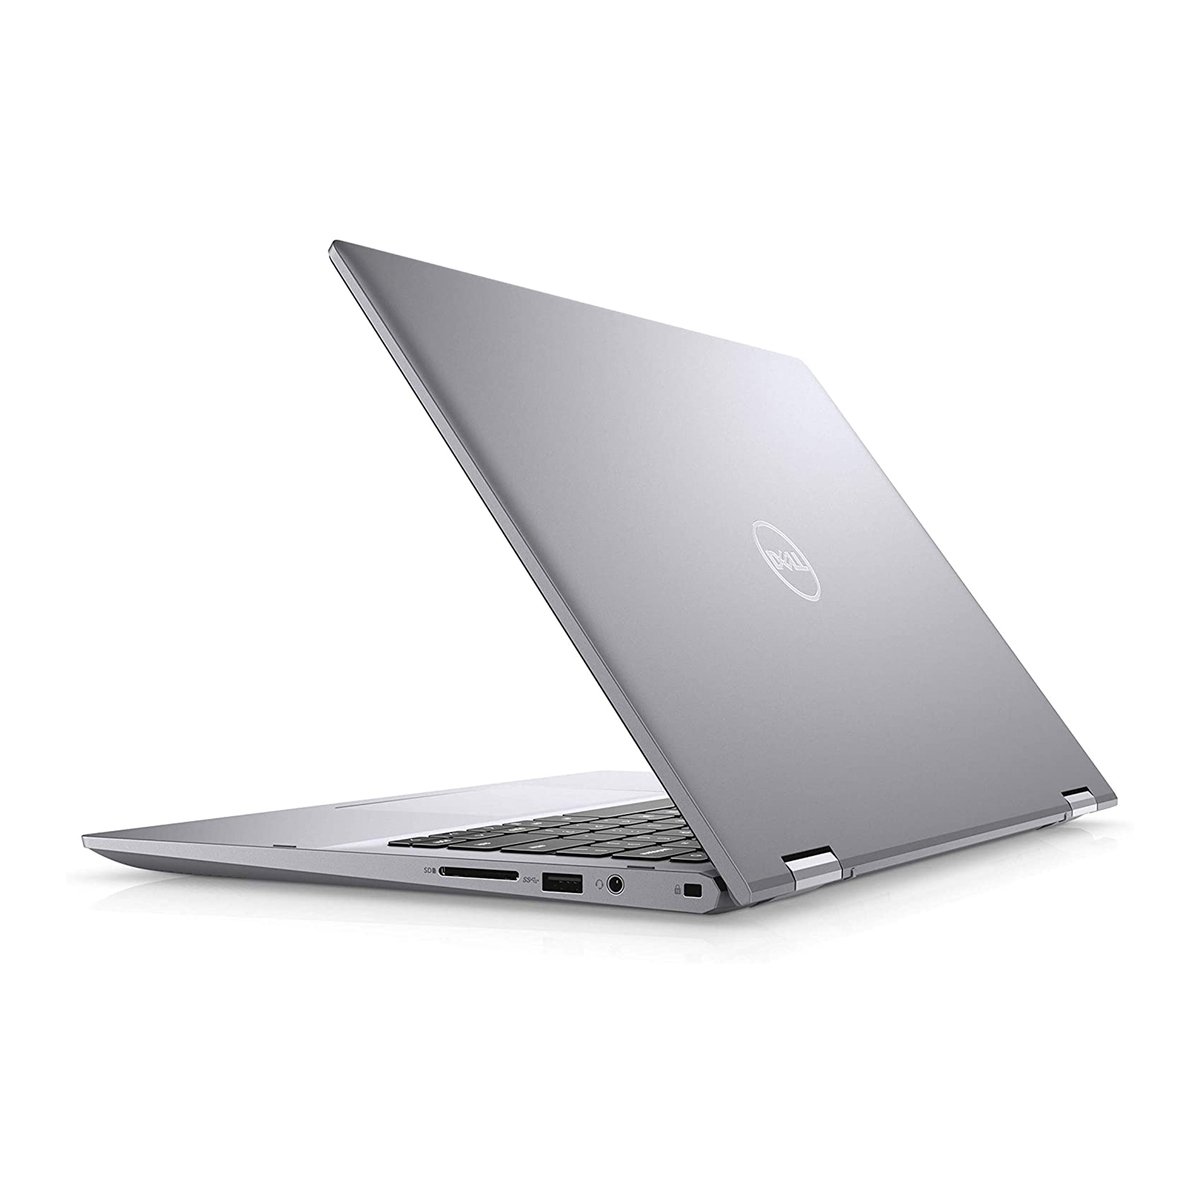 Dell Inspiron 14 (5400-INS-5009B) 2-in-1 Touchscreen FHD Convertible Laptop (Titan Grey-Metal) Intel Core i5-1035GI 10th Generation,8GB DDR4 RAM, 256GB SSD, Windows 10